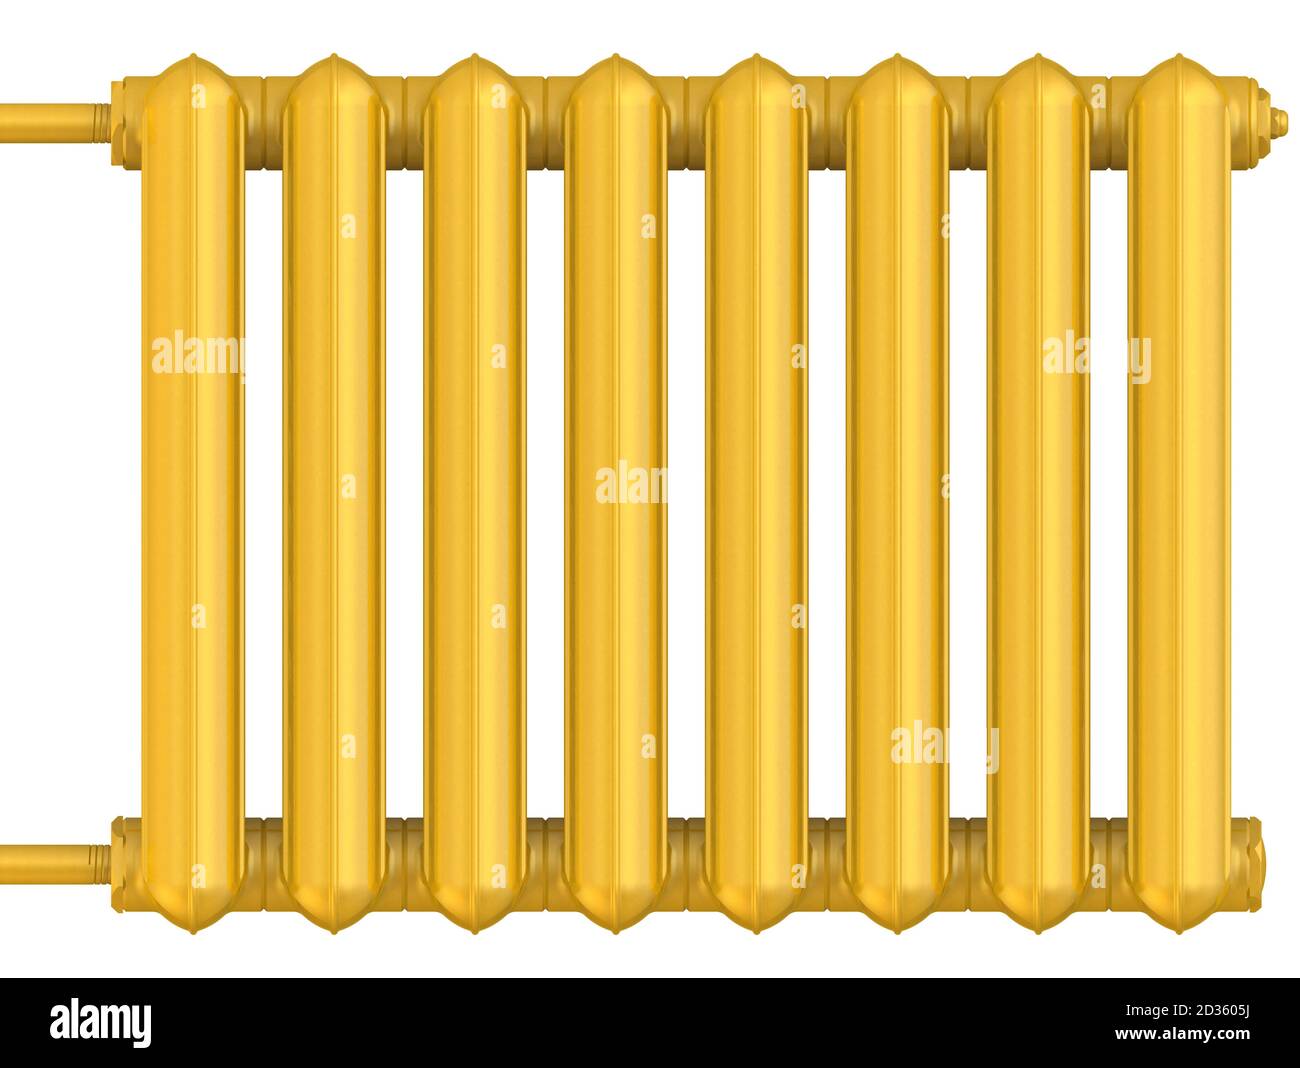 Golden heating radiator. Section of golden heating radiators isolated on white background. 3D illustration Stock Photo